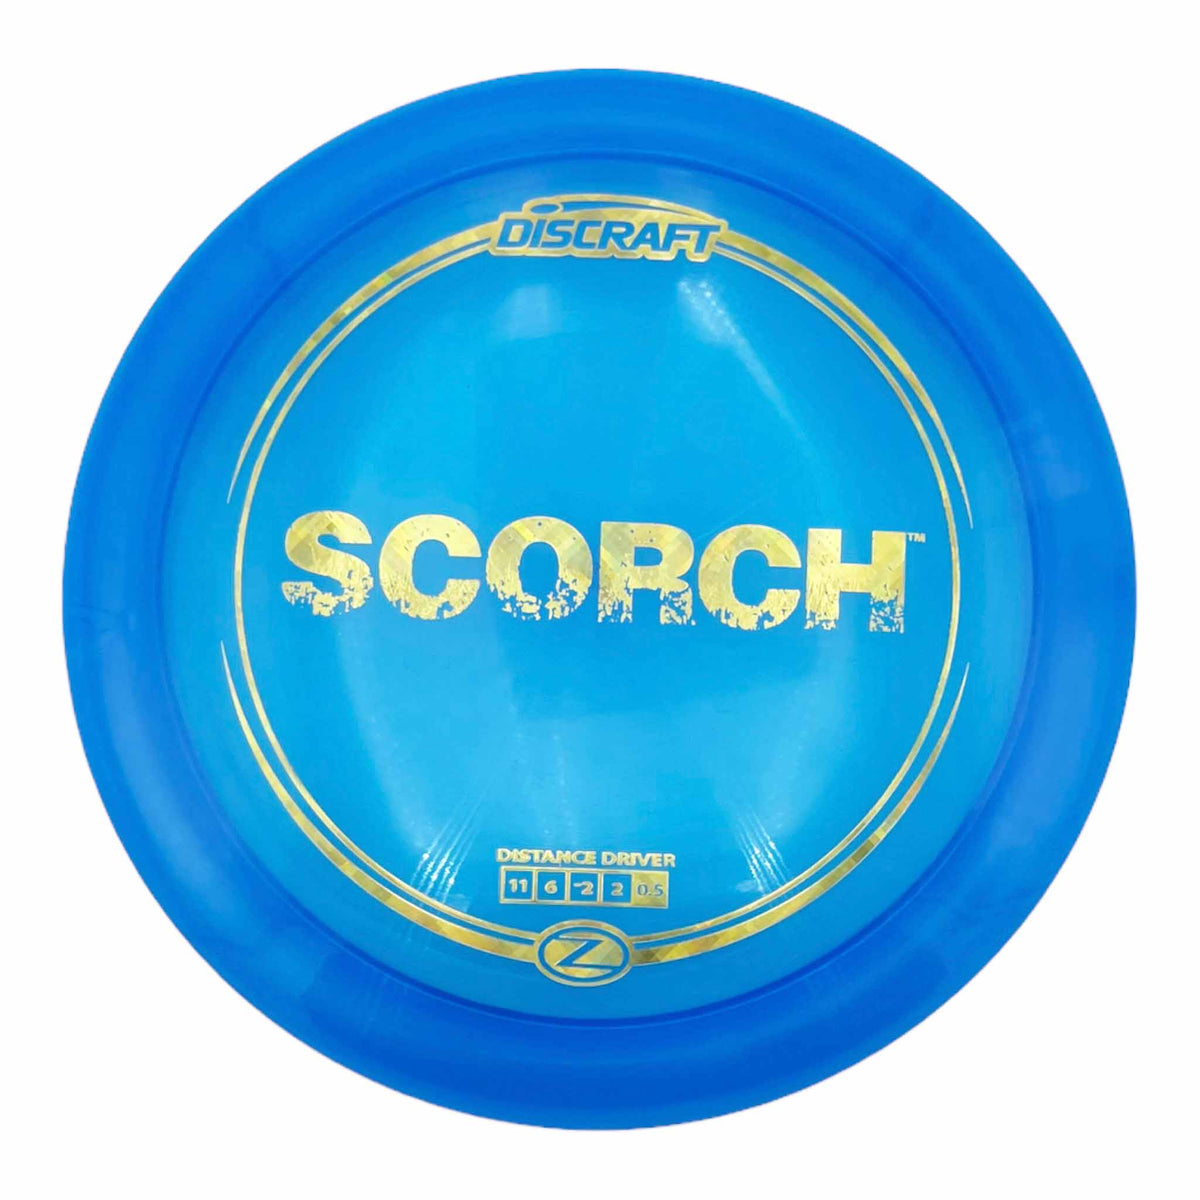 Discraft Z Line Scorch distance driver - Blue / Gold